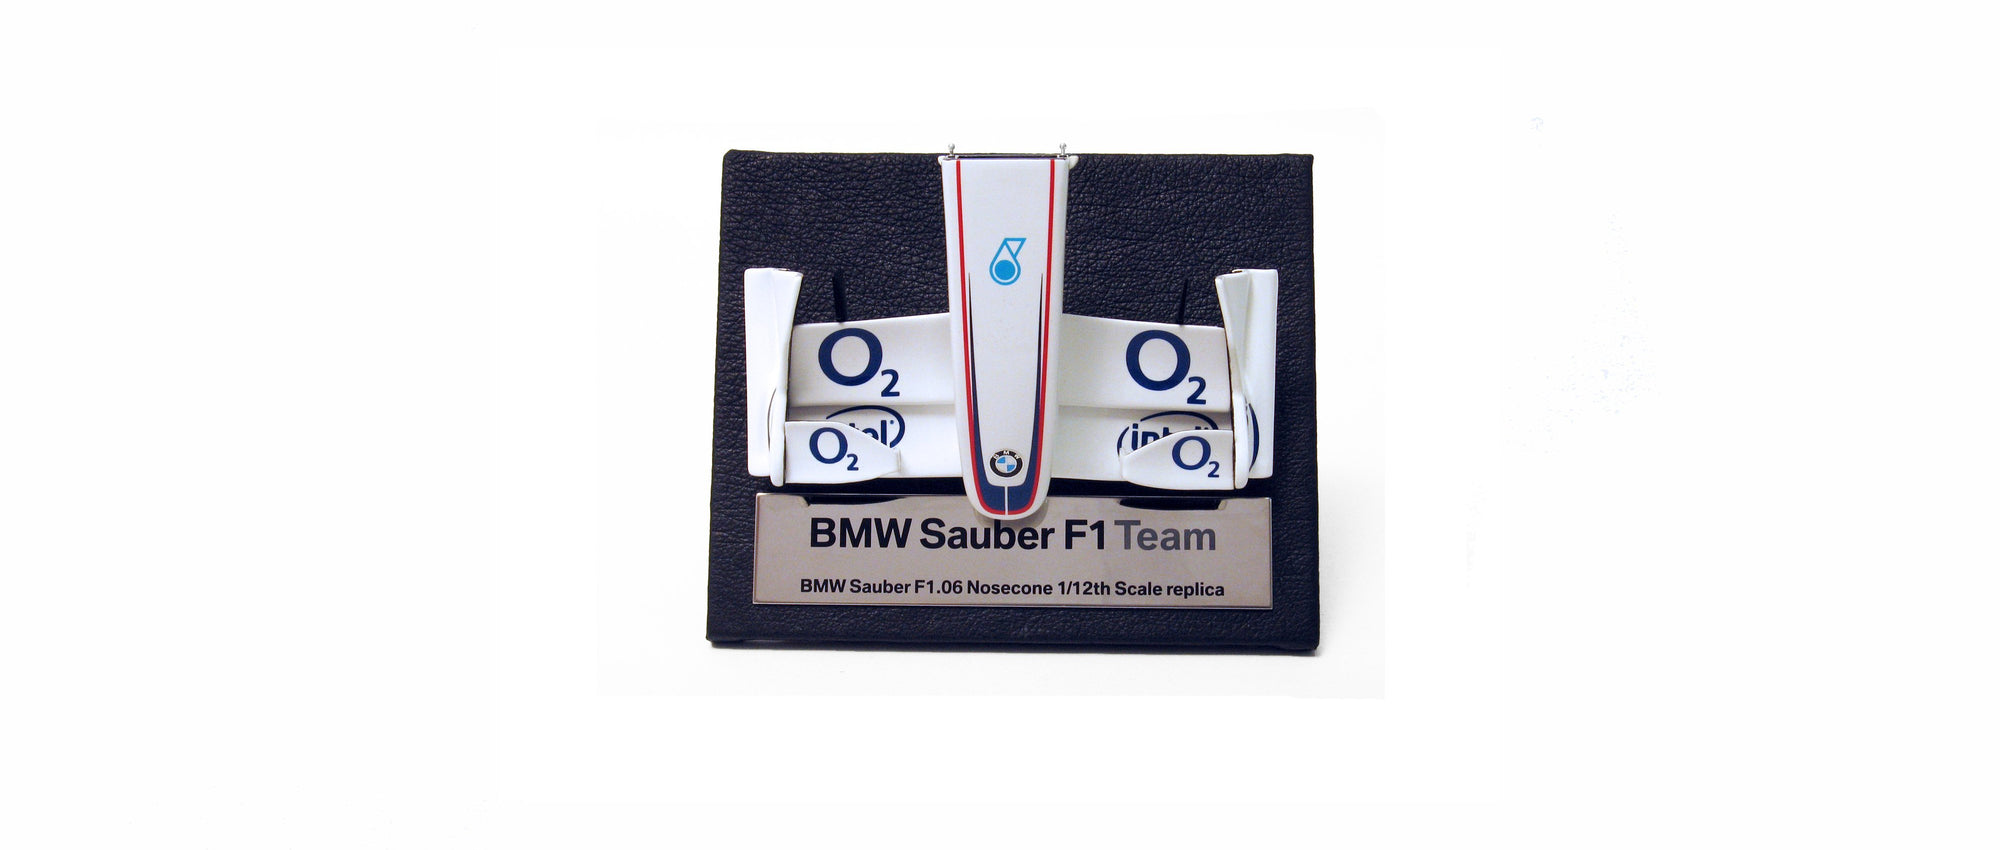 Bmw Sauber F1 06 06 Nosecone Amalgam Collection